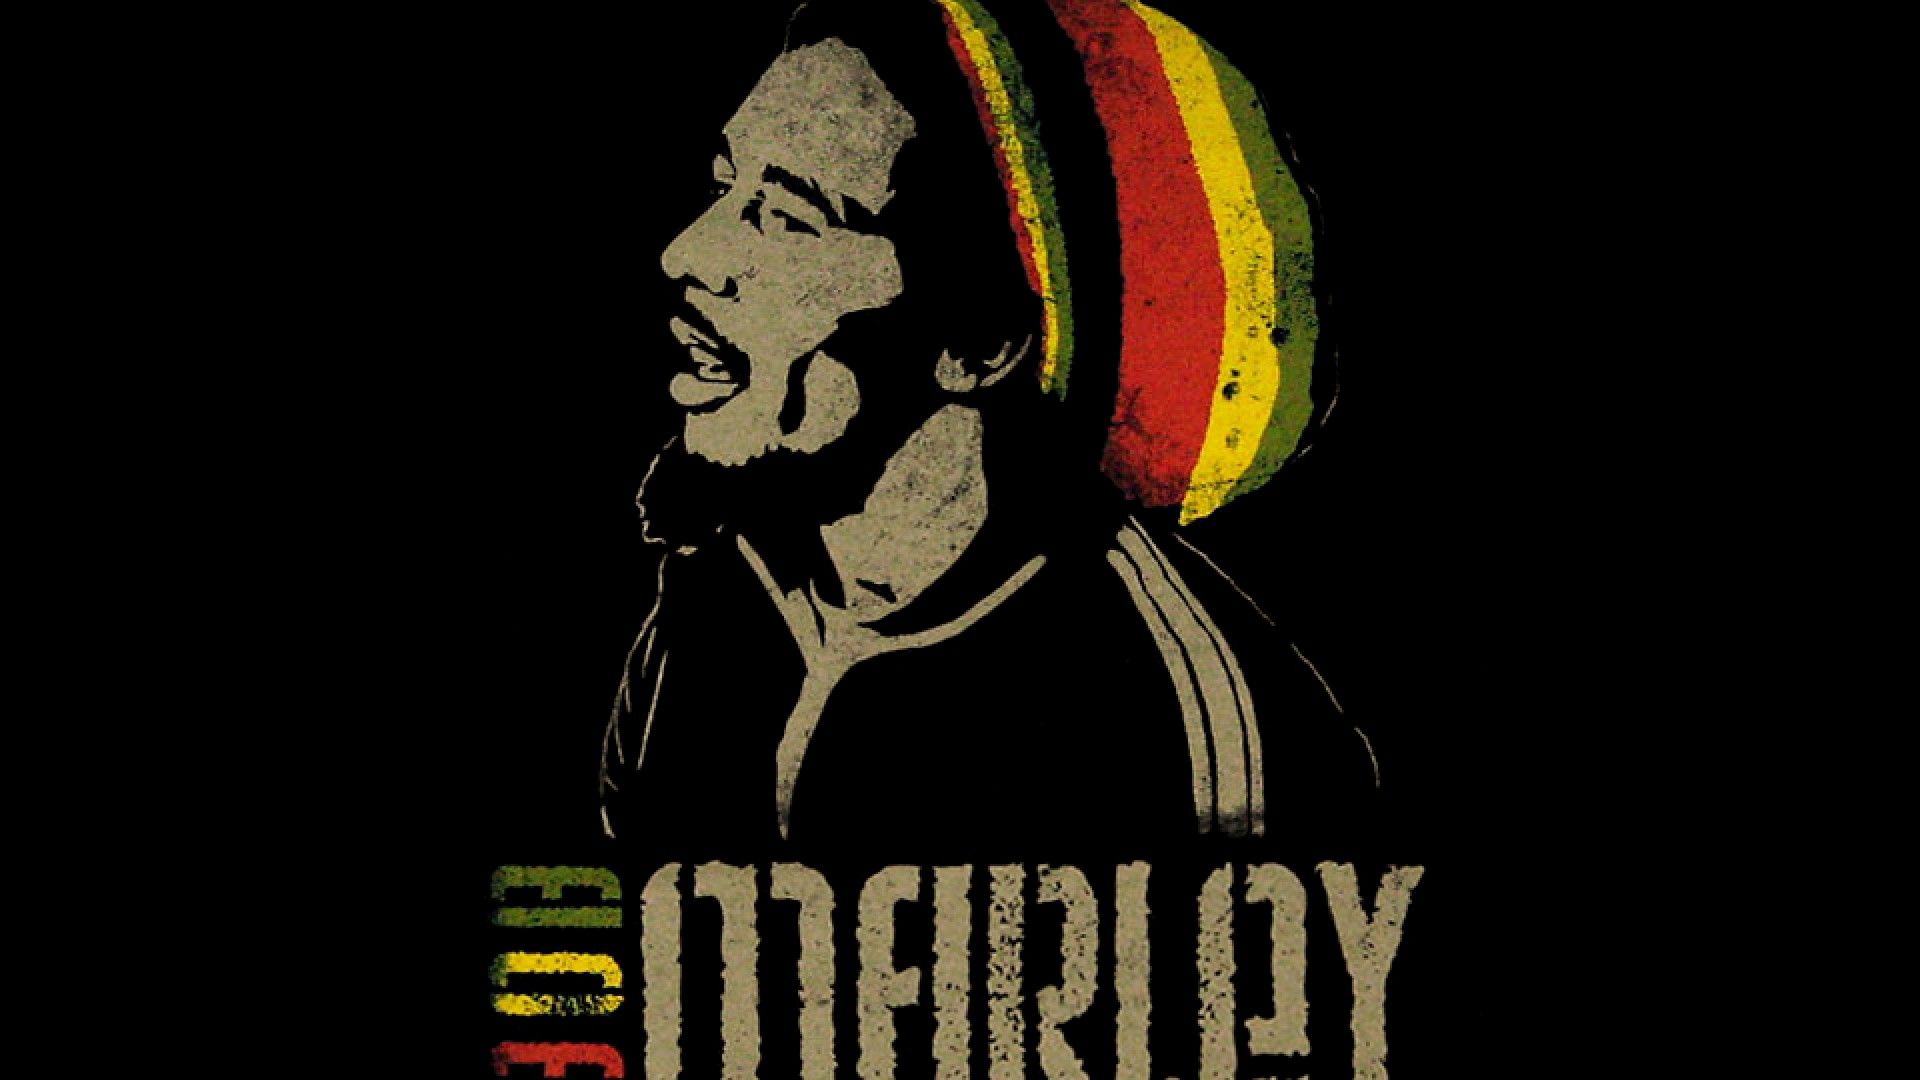 Bob Marley Mobile reggae, 1920x1080 Wallpaper and Free Stock Photo